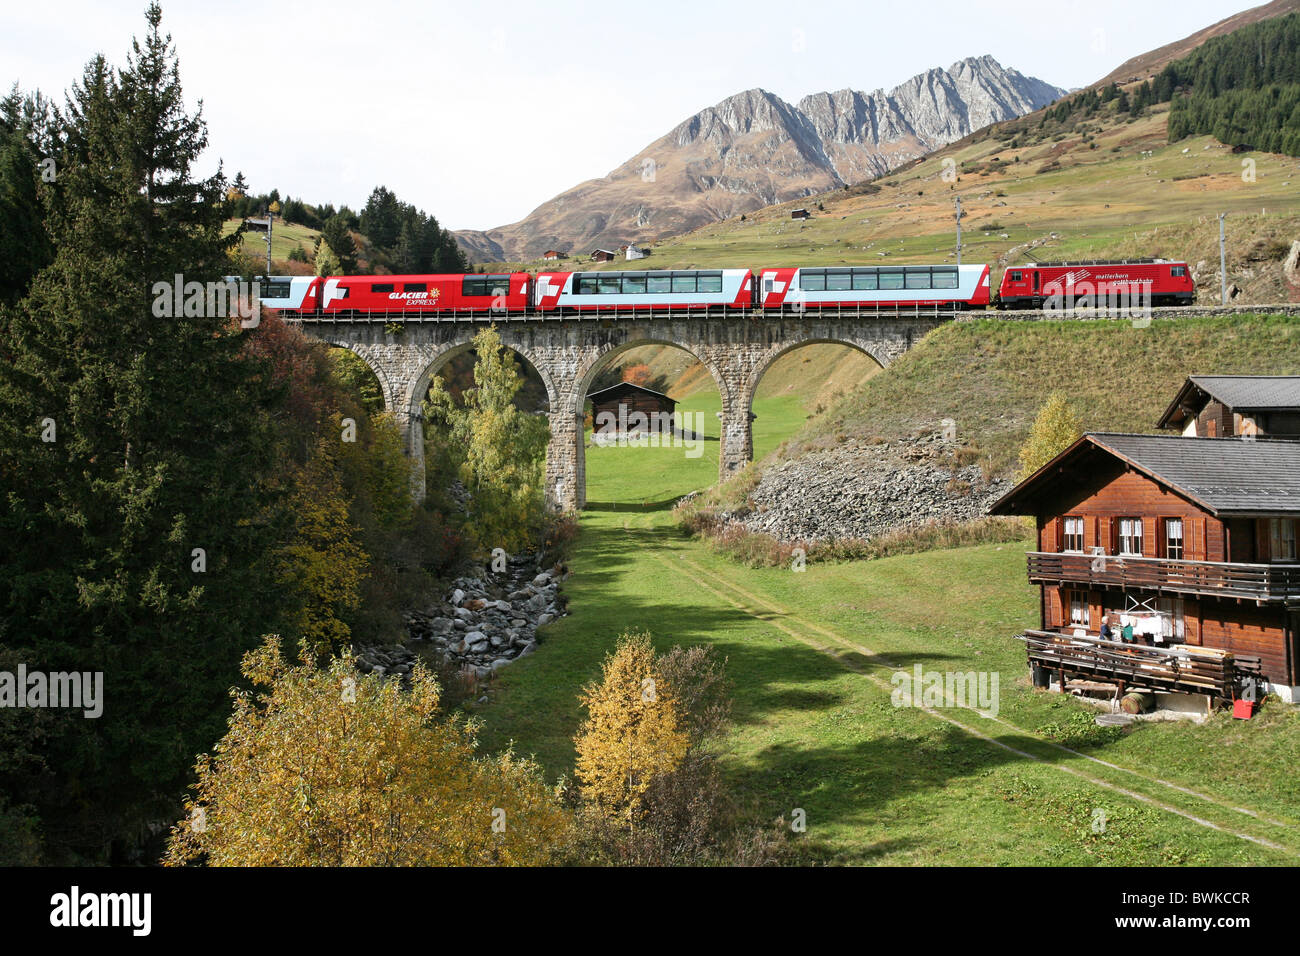 Otoño tren Glacier Express viaducto puente carretera ferrocarril ferrocarril transporte turismo Matterhor Foto de stock